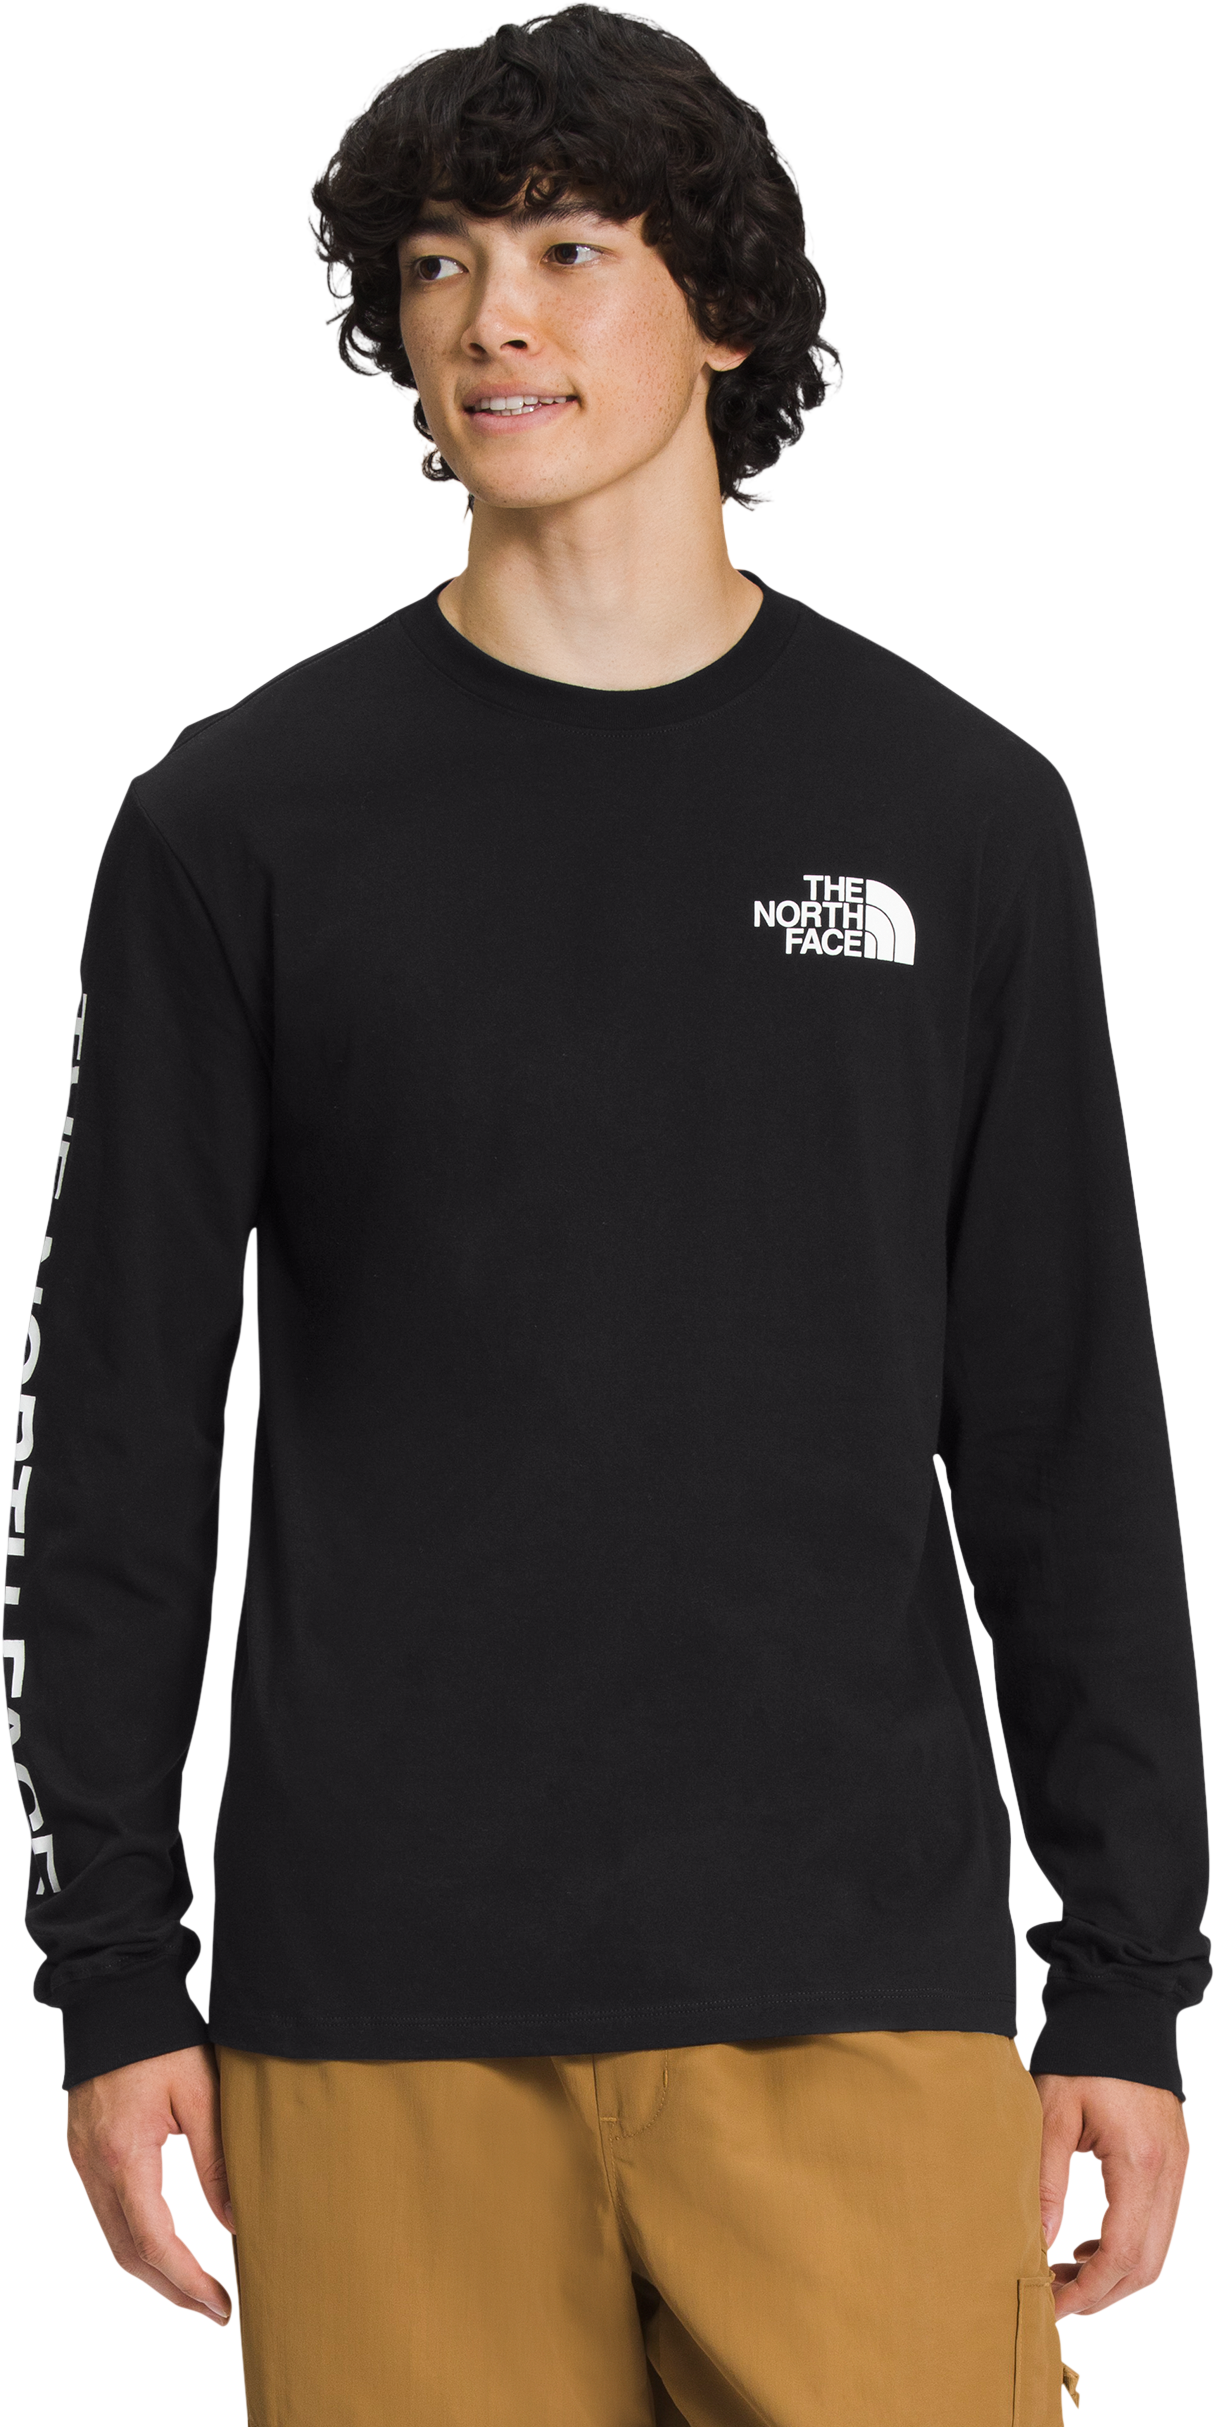 The North Face Hit Graphic Long-Sleeve T-Shirt for Men - TNF Black/TNF White - S